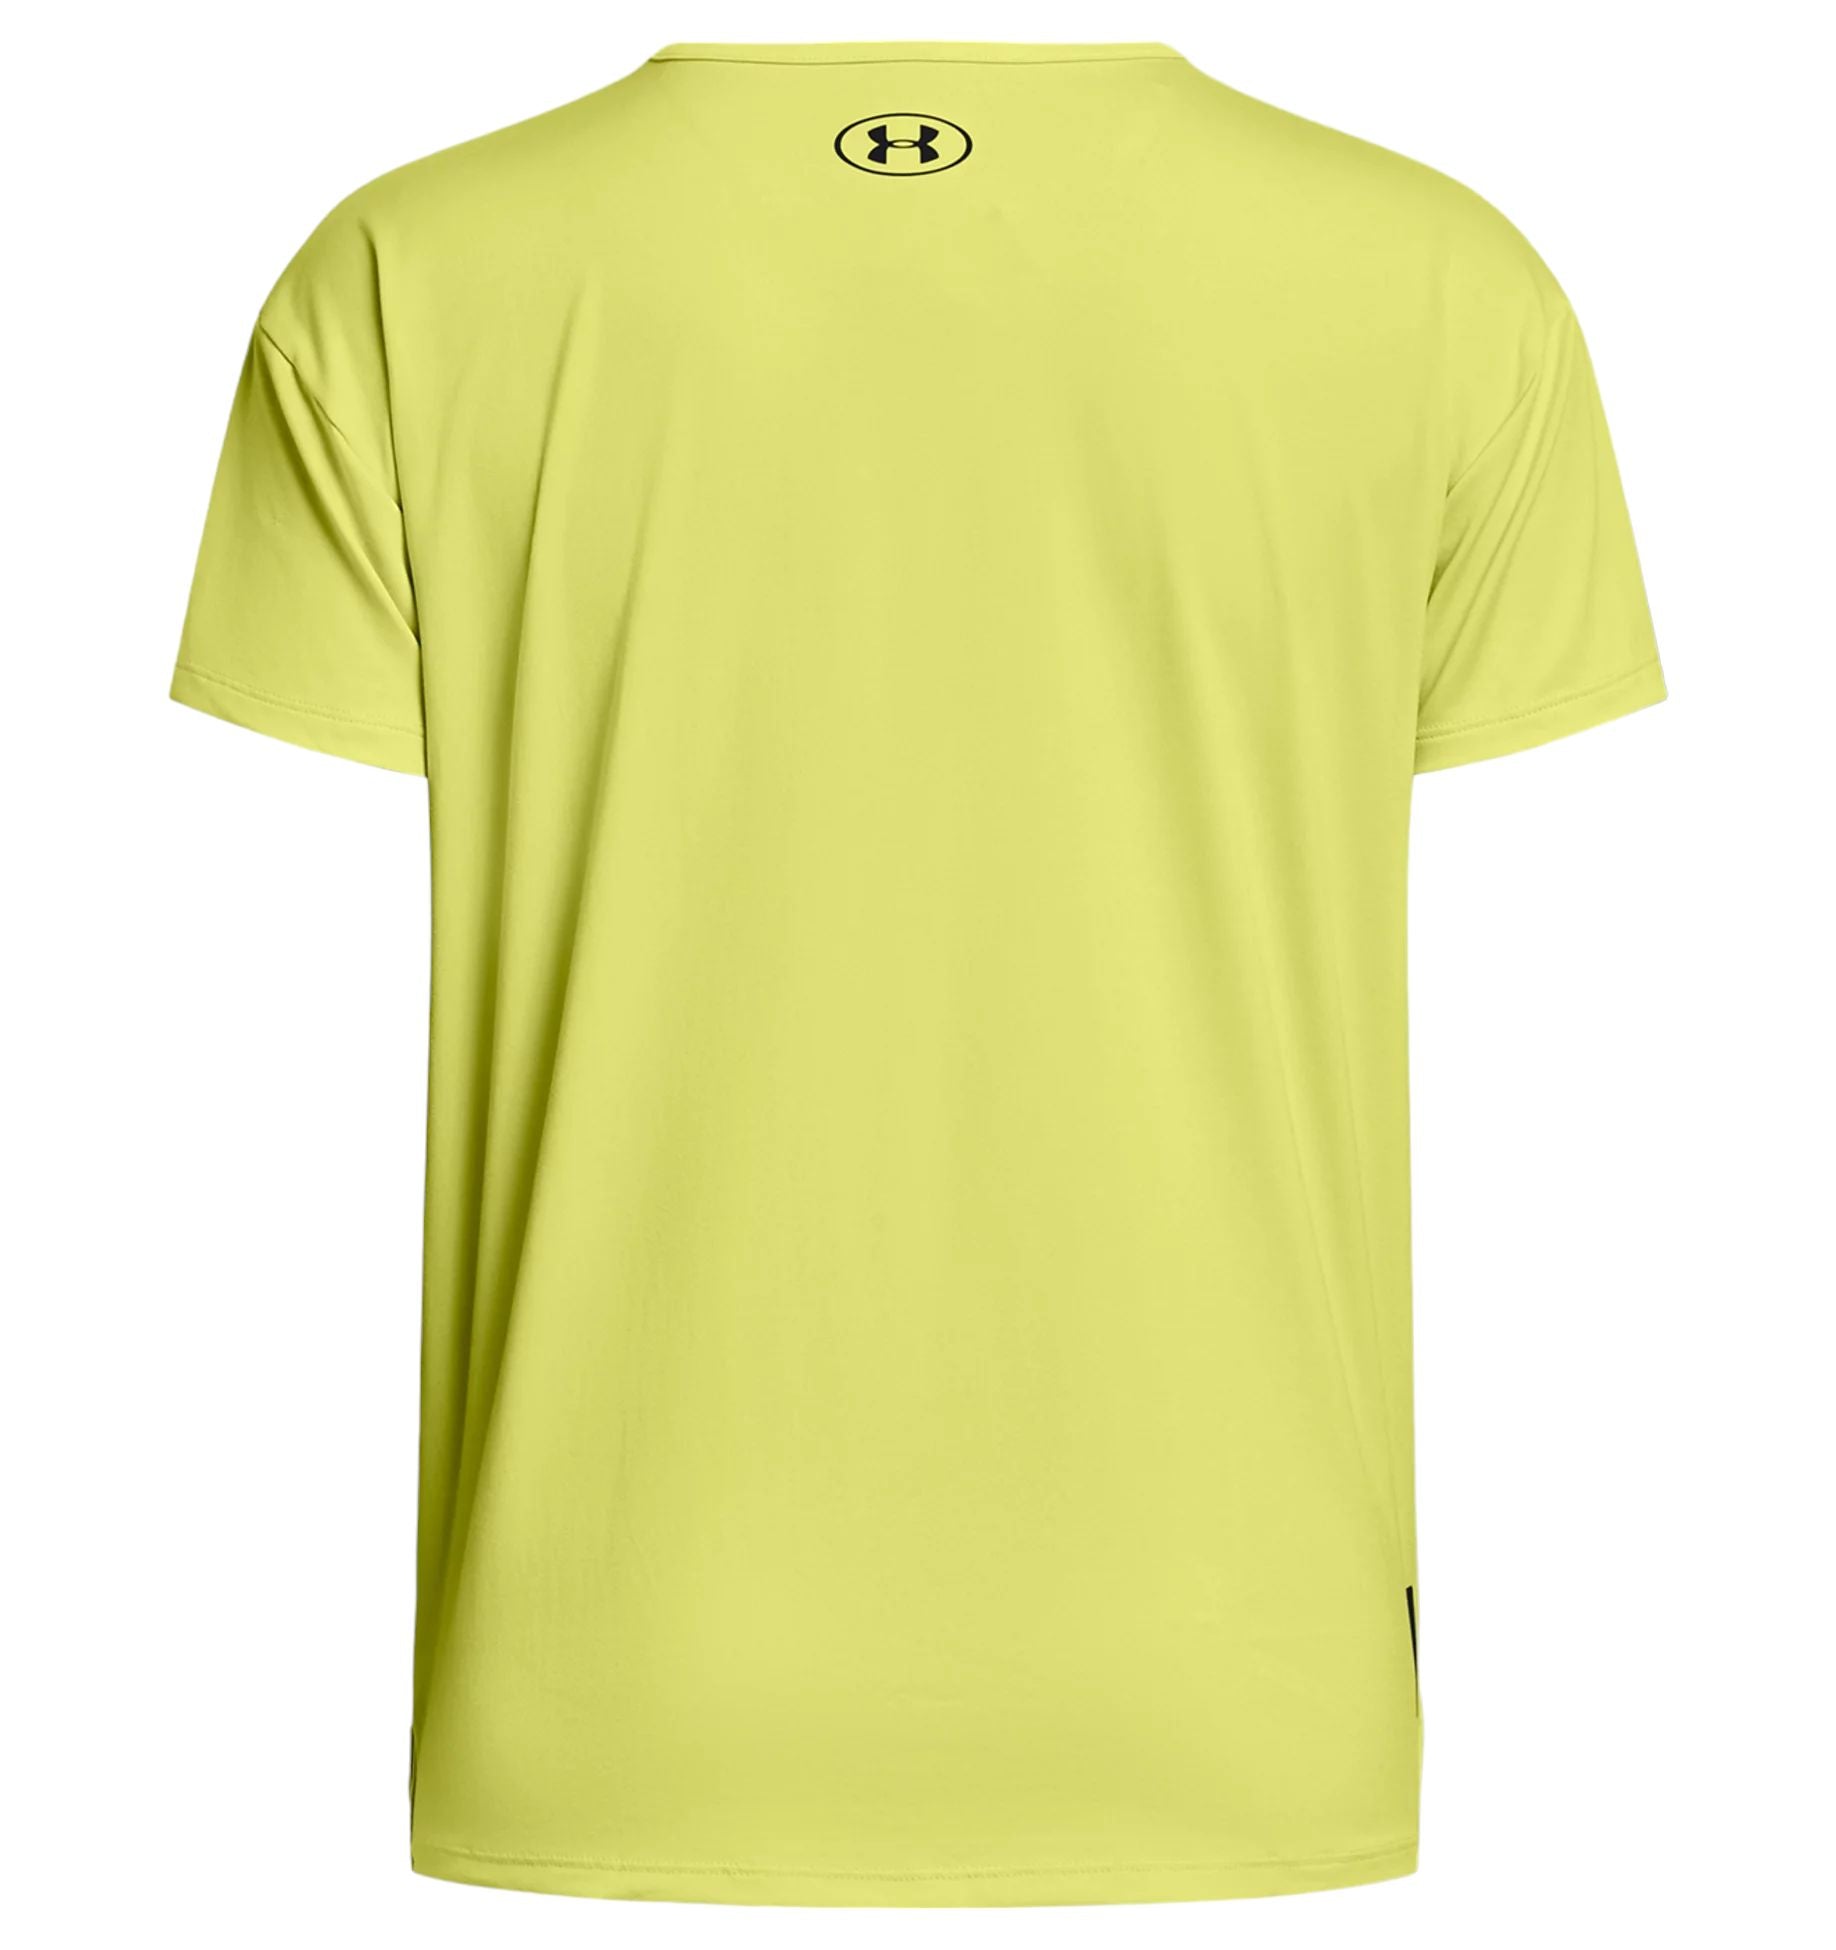 Women's Rush Energy 2.0 T-shirt Lime Yellow/Black 